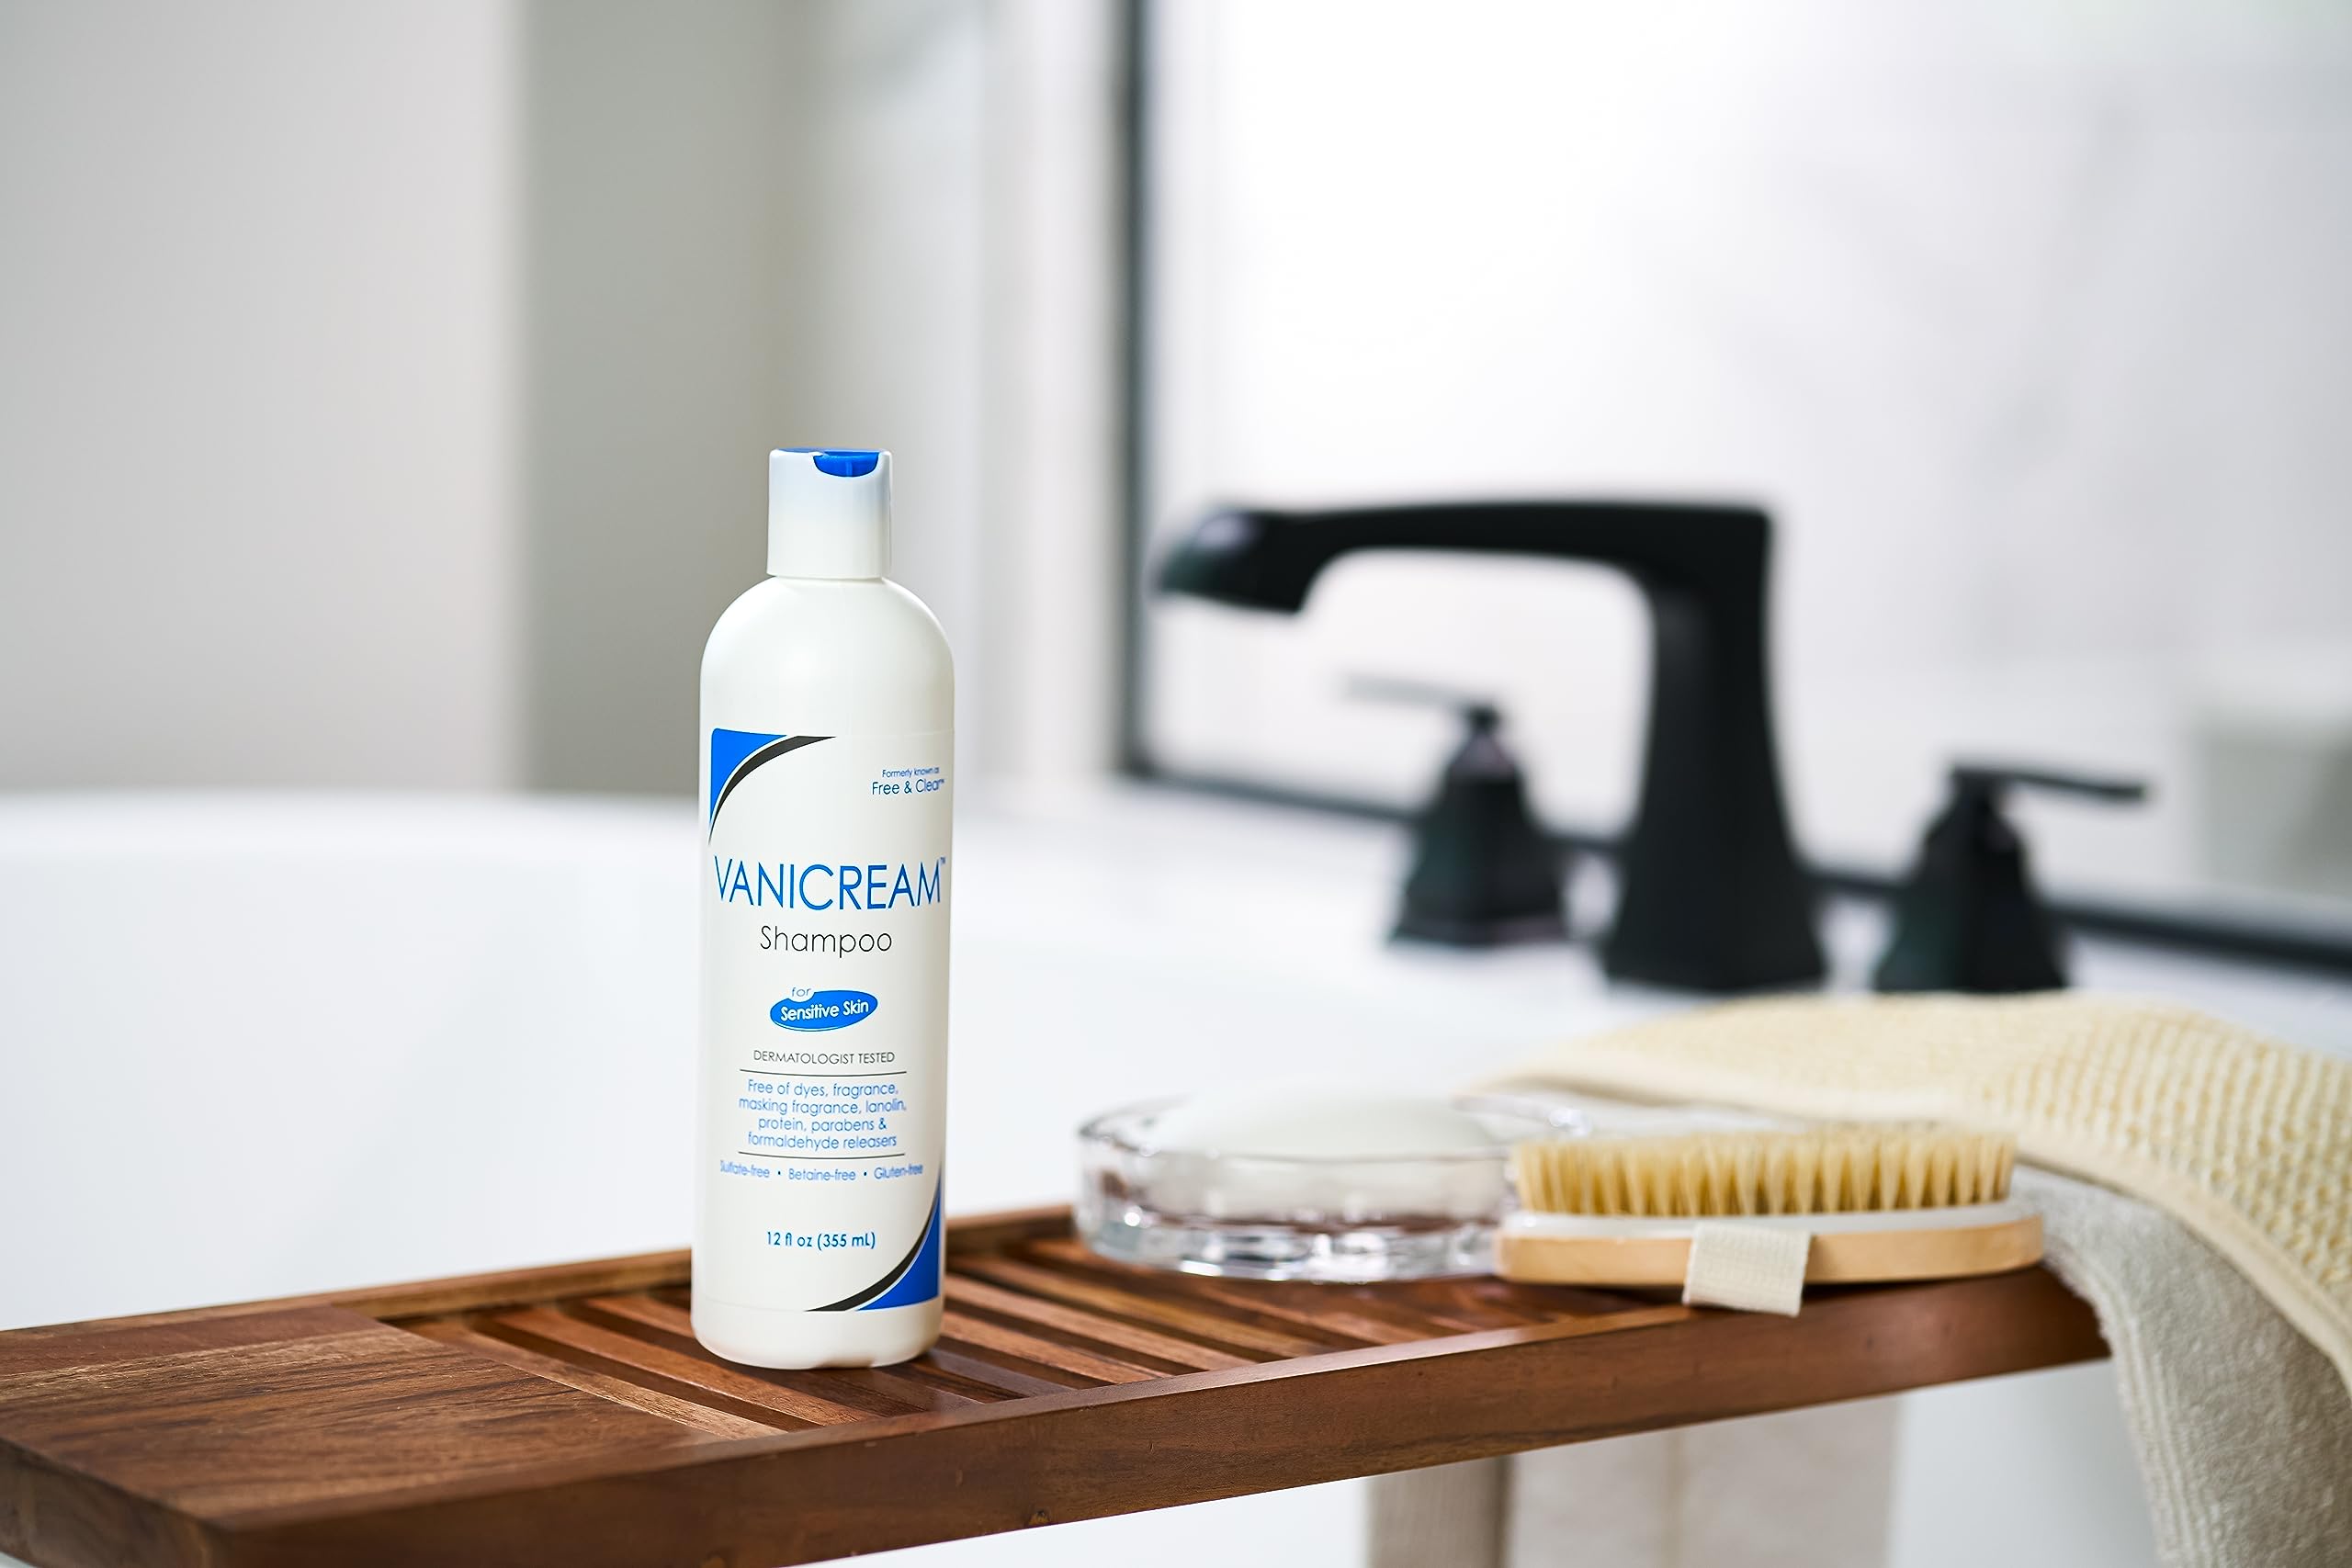 Vanicream Shampoo – pH Balanced Mild Formula Effective For All Hair Types and Sensitive Scalps - Free of Fragrance, Lanolin, and Parabens – 12 Fl Oz